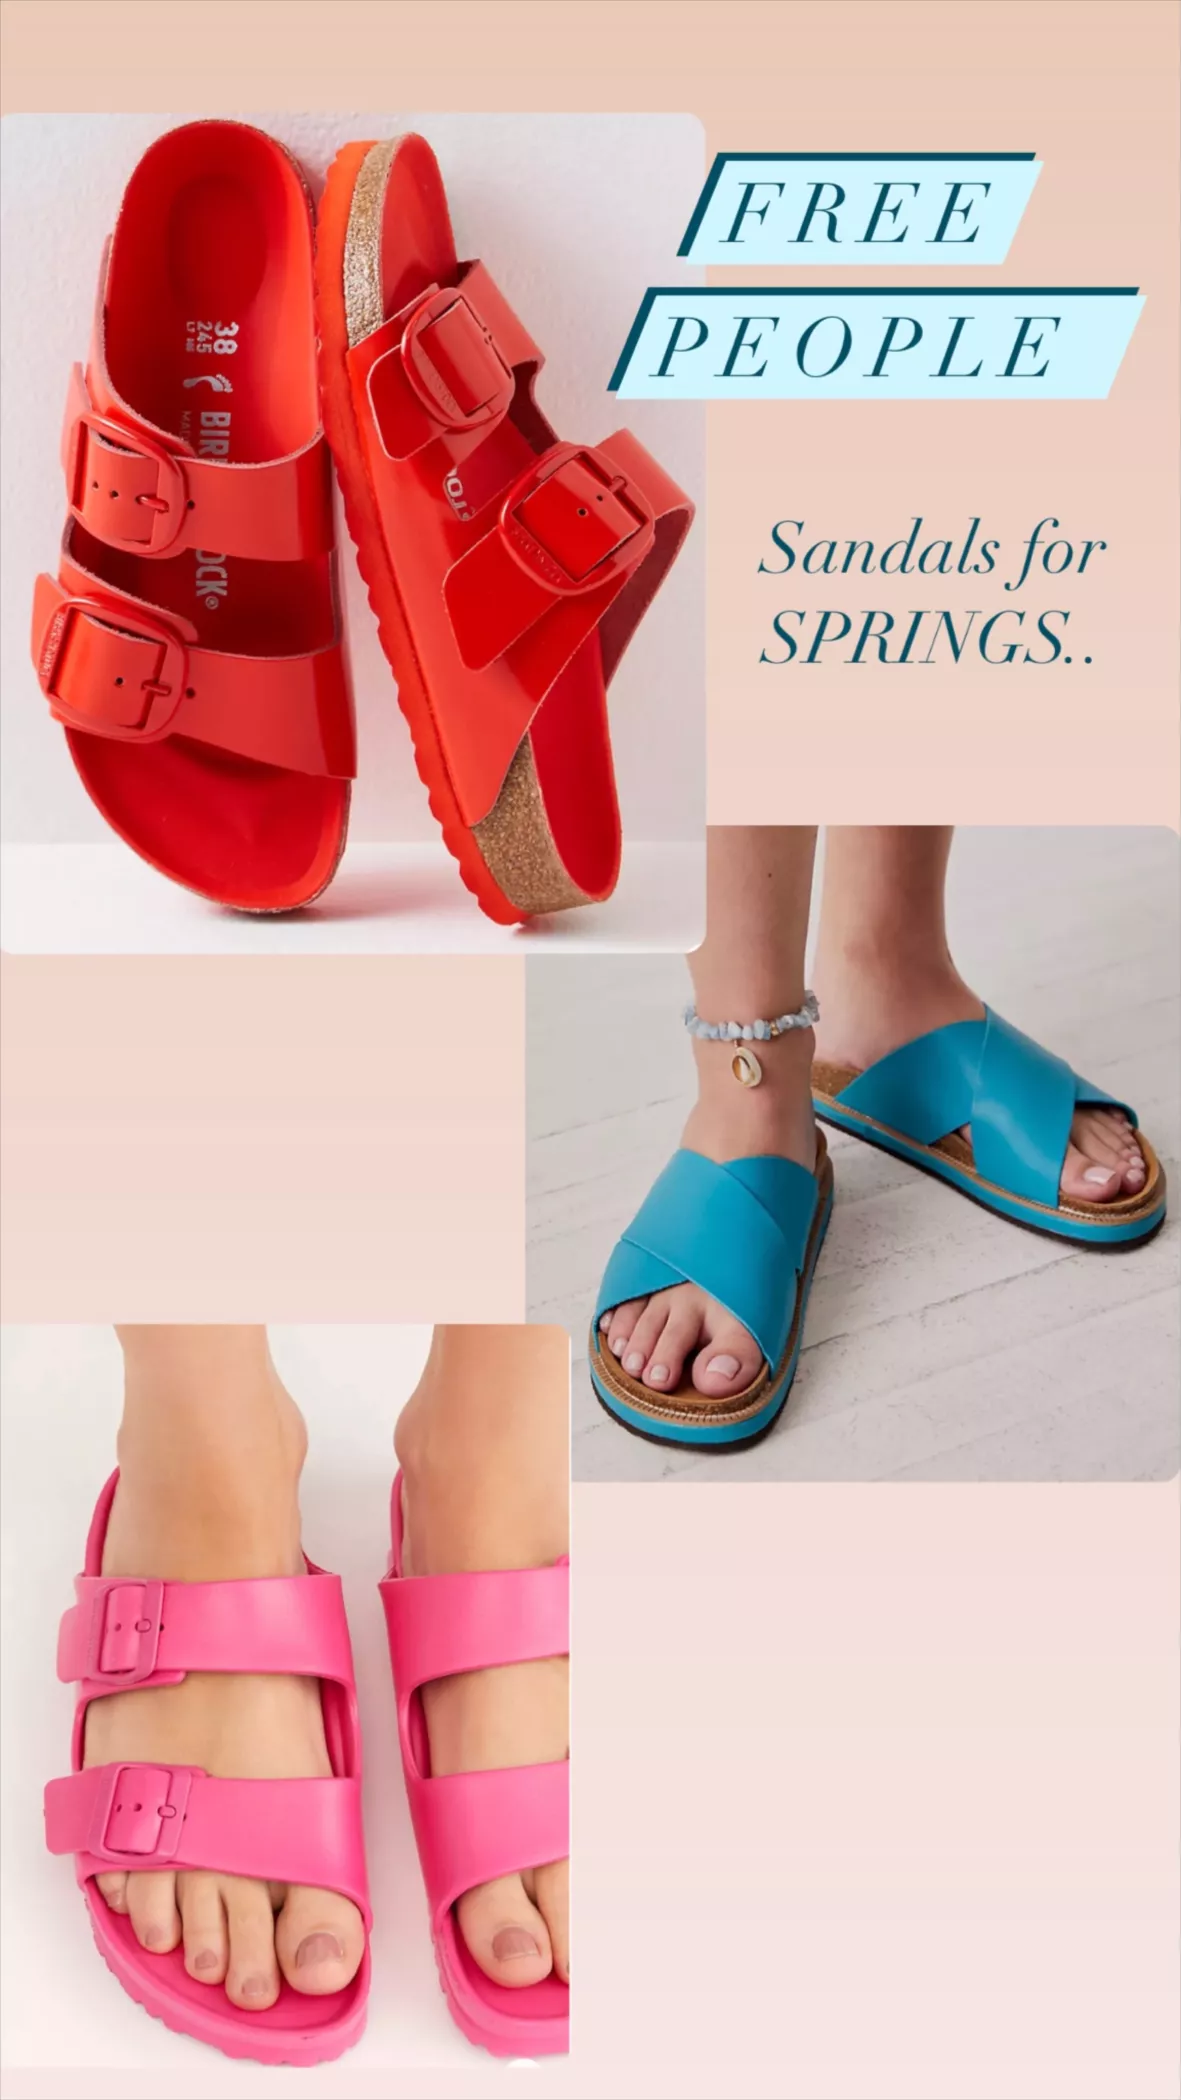 EVA Arizona Sandals curated on LTK